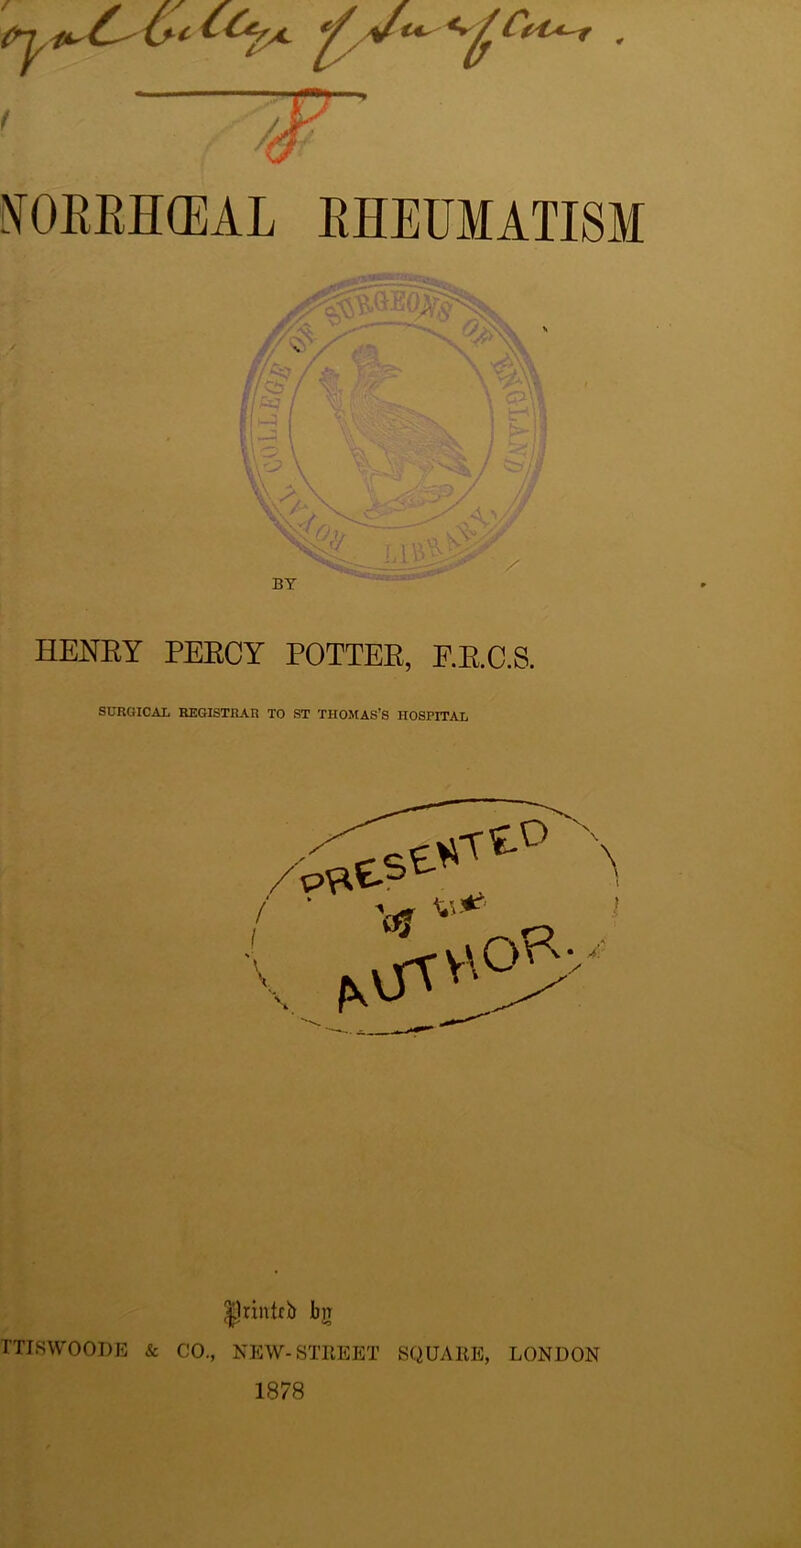 / 7*' *9 y ffOBBH(BAL RHEUMATISM BY £Qp „,0 sv; y>' SUU uyw£^ HENRY PEECY POTTER, F.R.C.S. SURGICAL REGISTRAR TO ST THOMAS’S HOSPITAL |nntrb bjr TTISWOODE & CO., NEW-STREET SQUARE, LONDON 1878